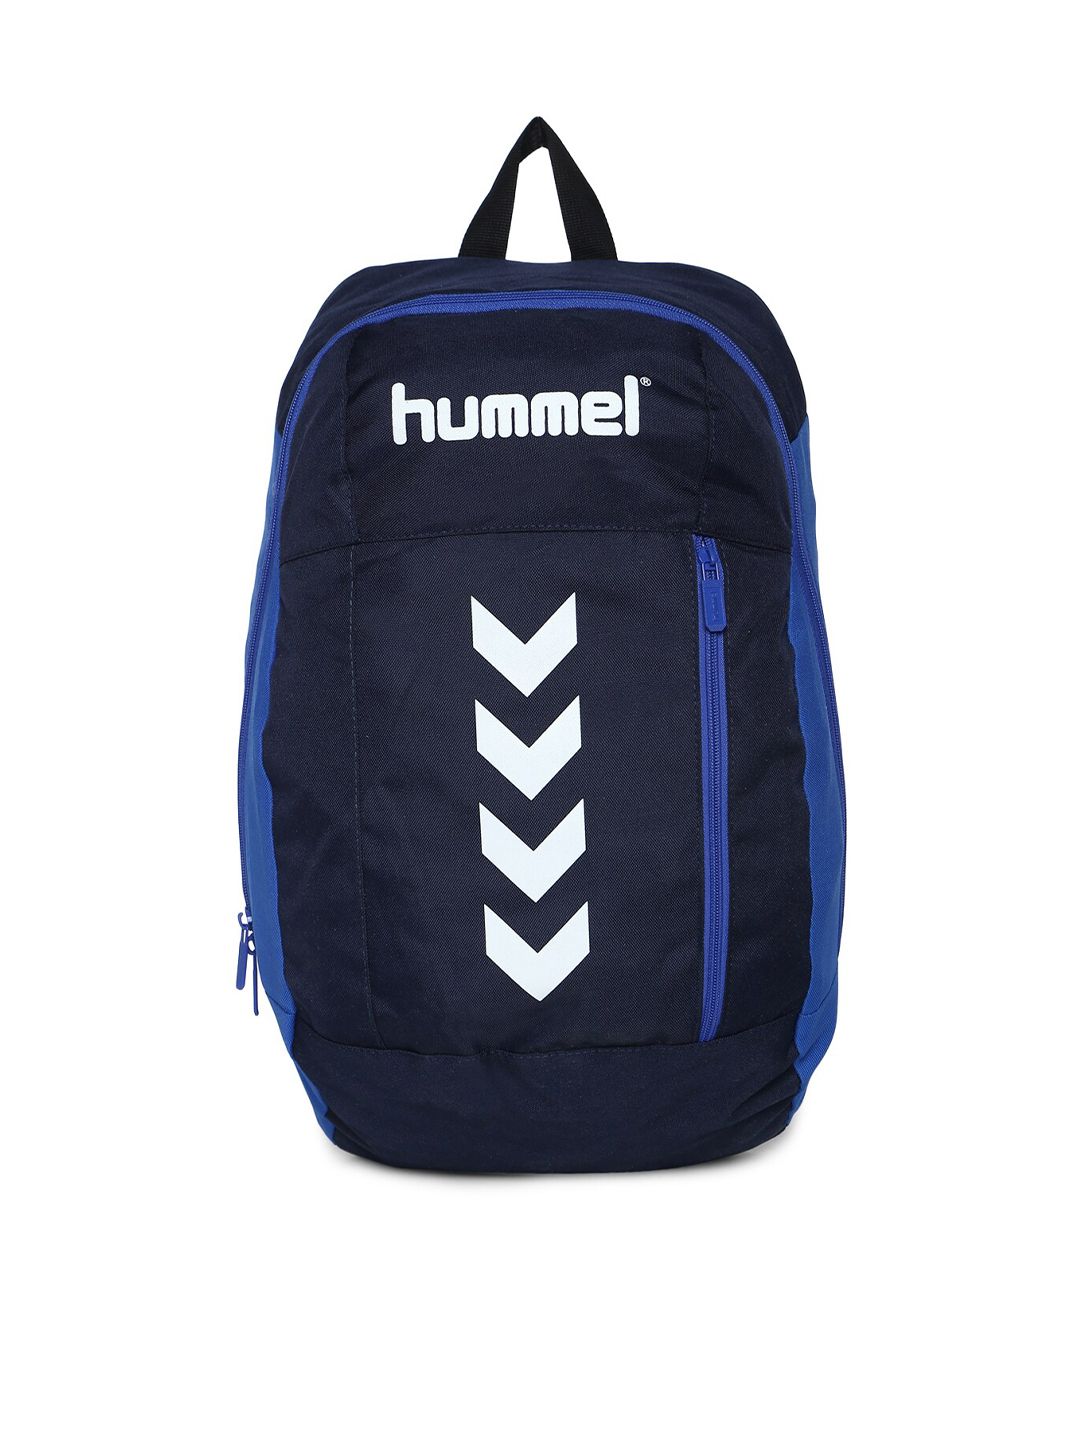 hummel Unisex Blue & White Brand Logo Backpack Price in India